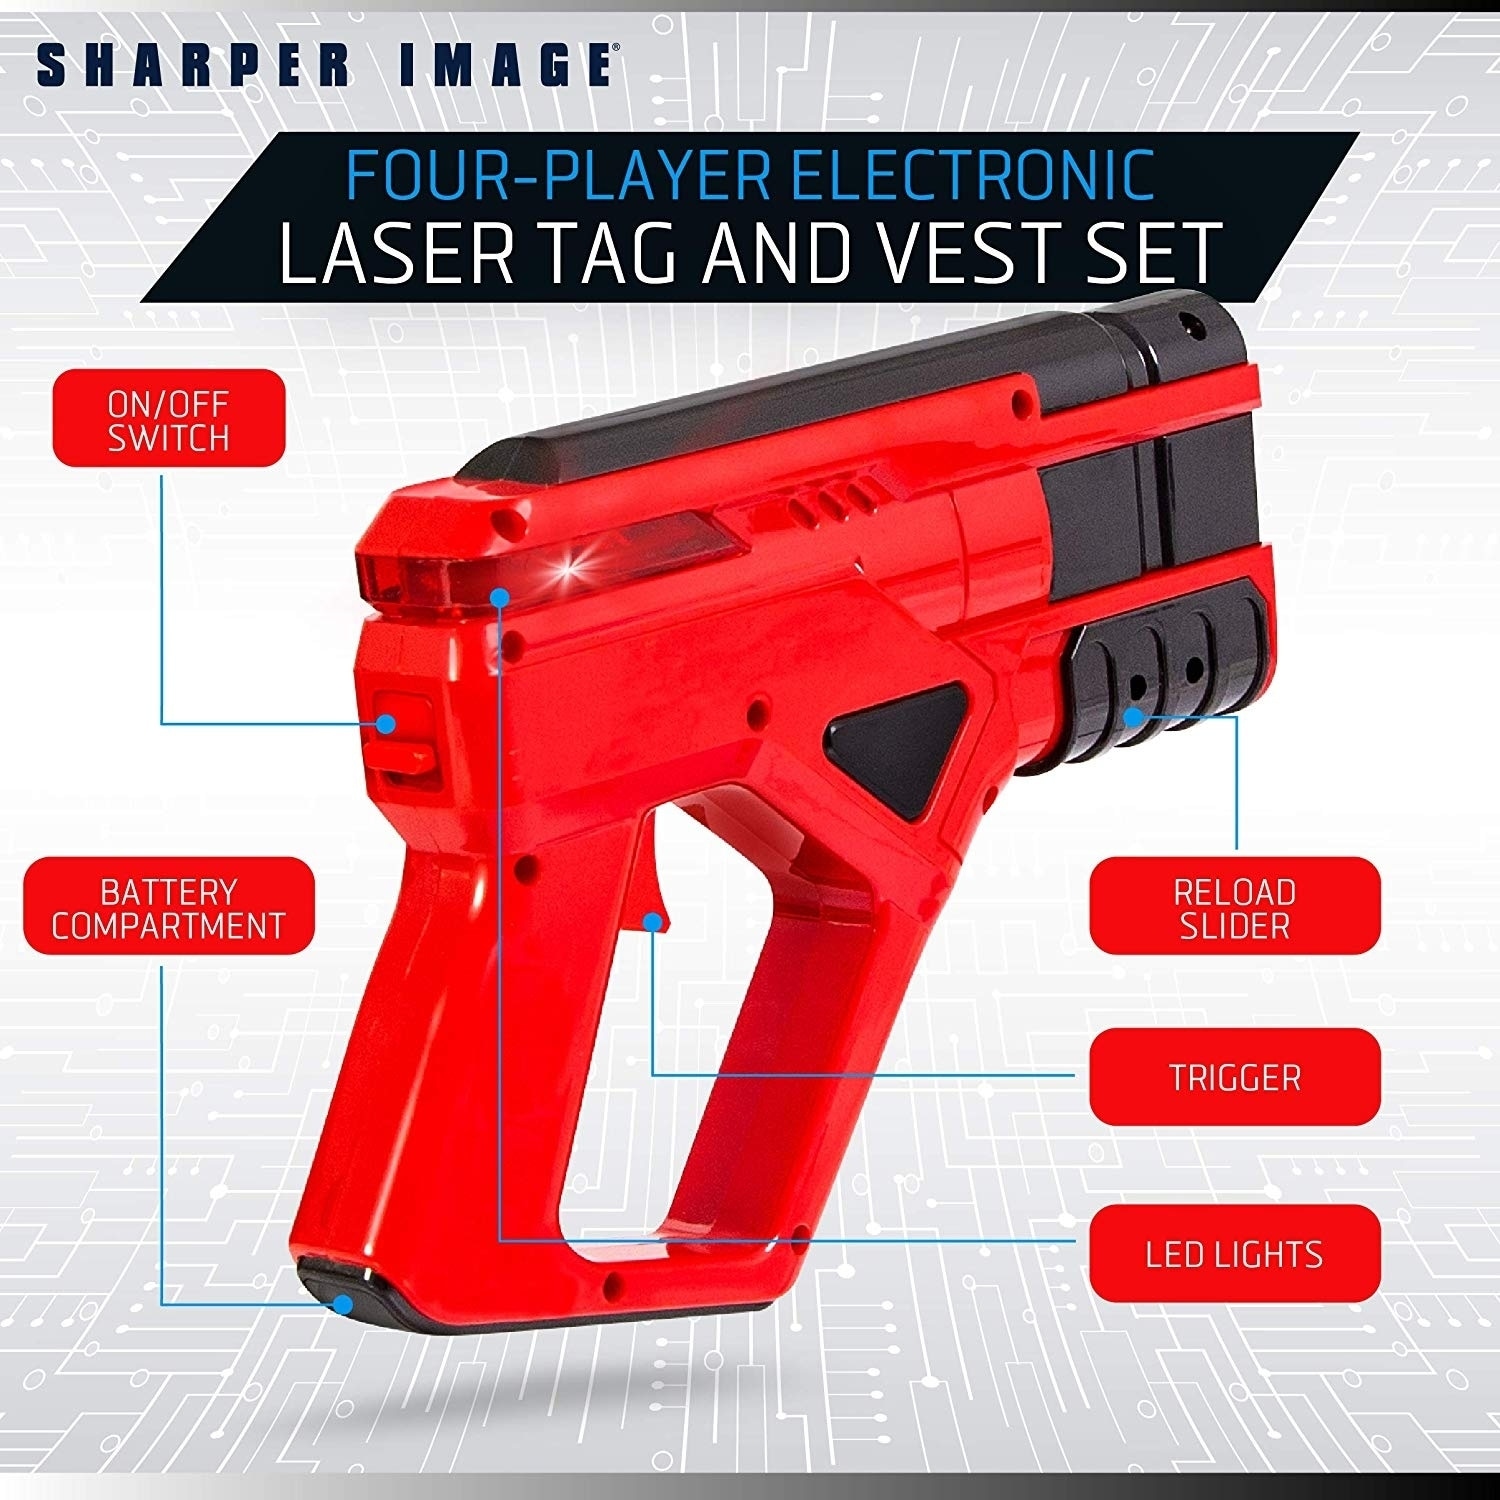 sharper image laser tag shooting game